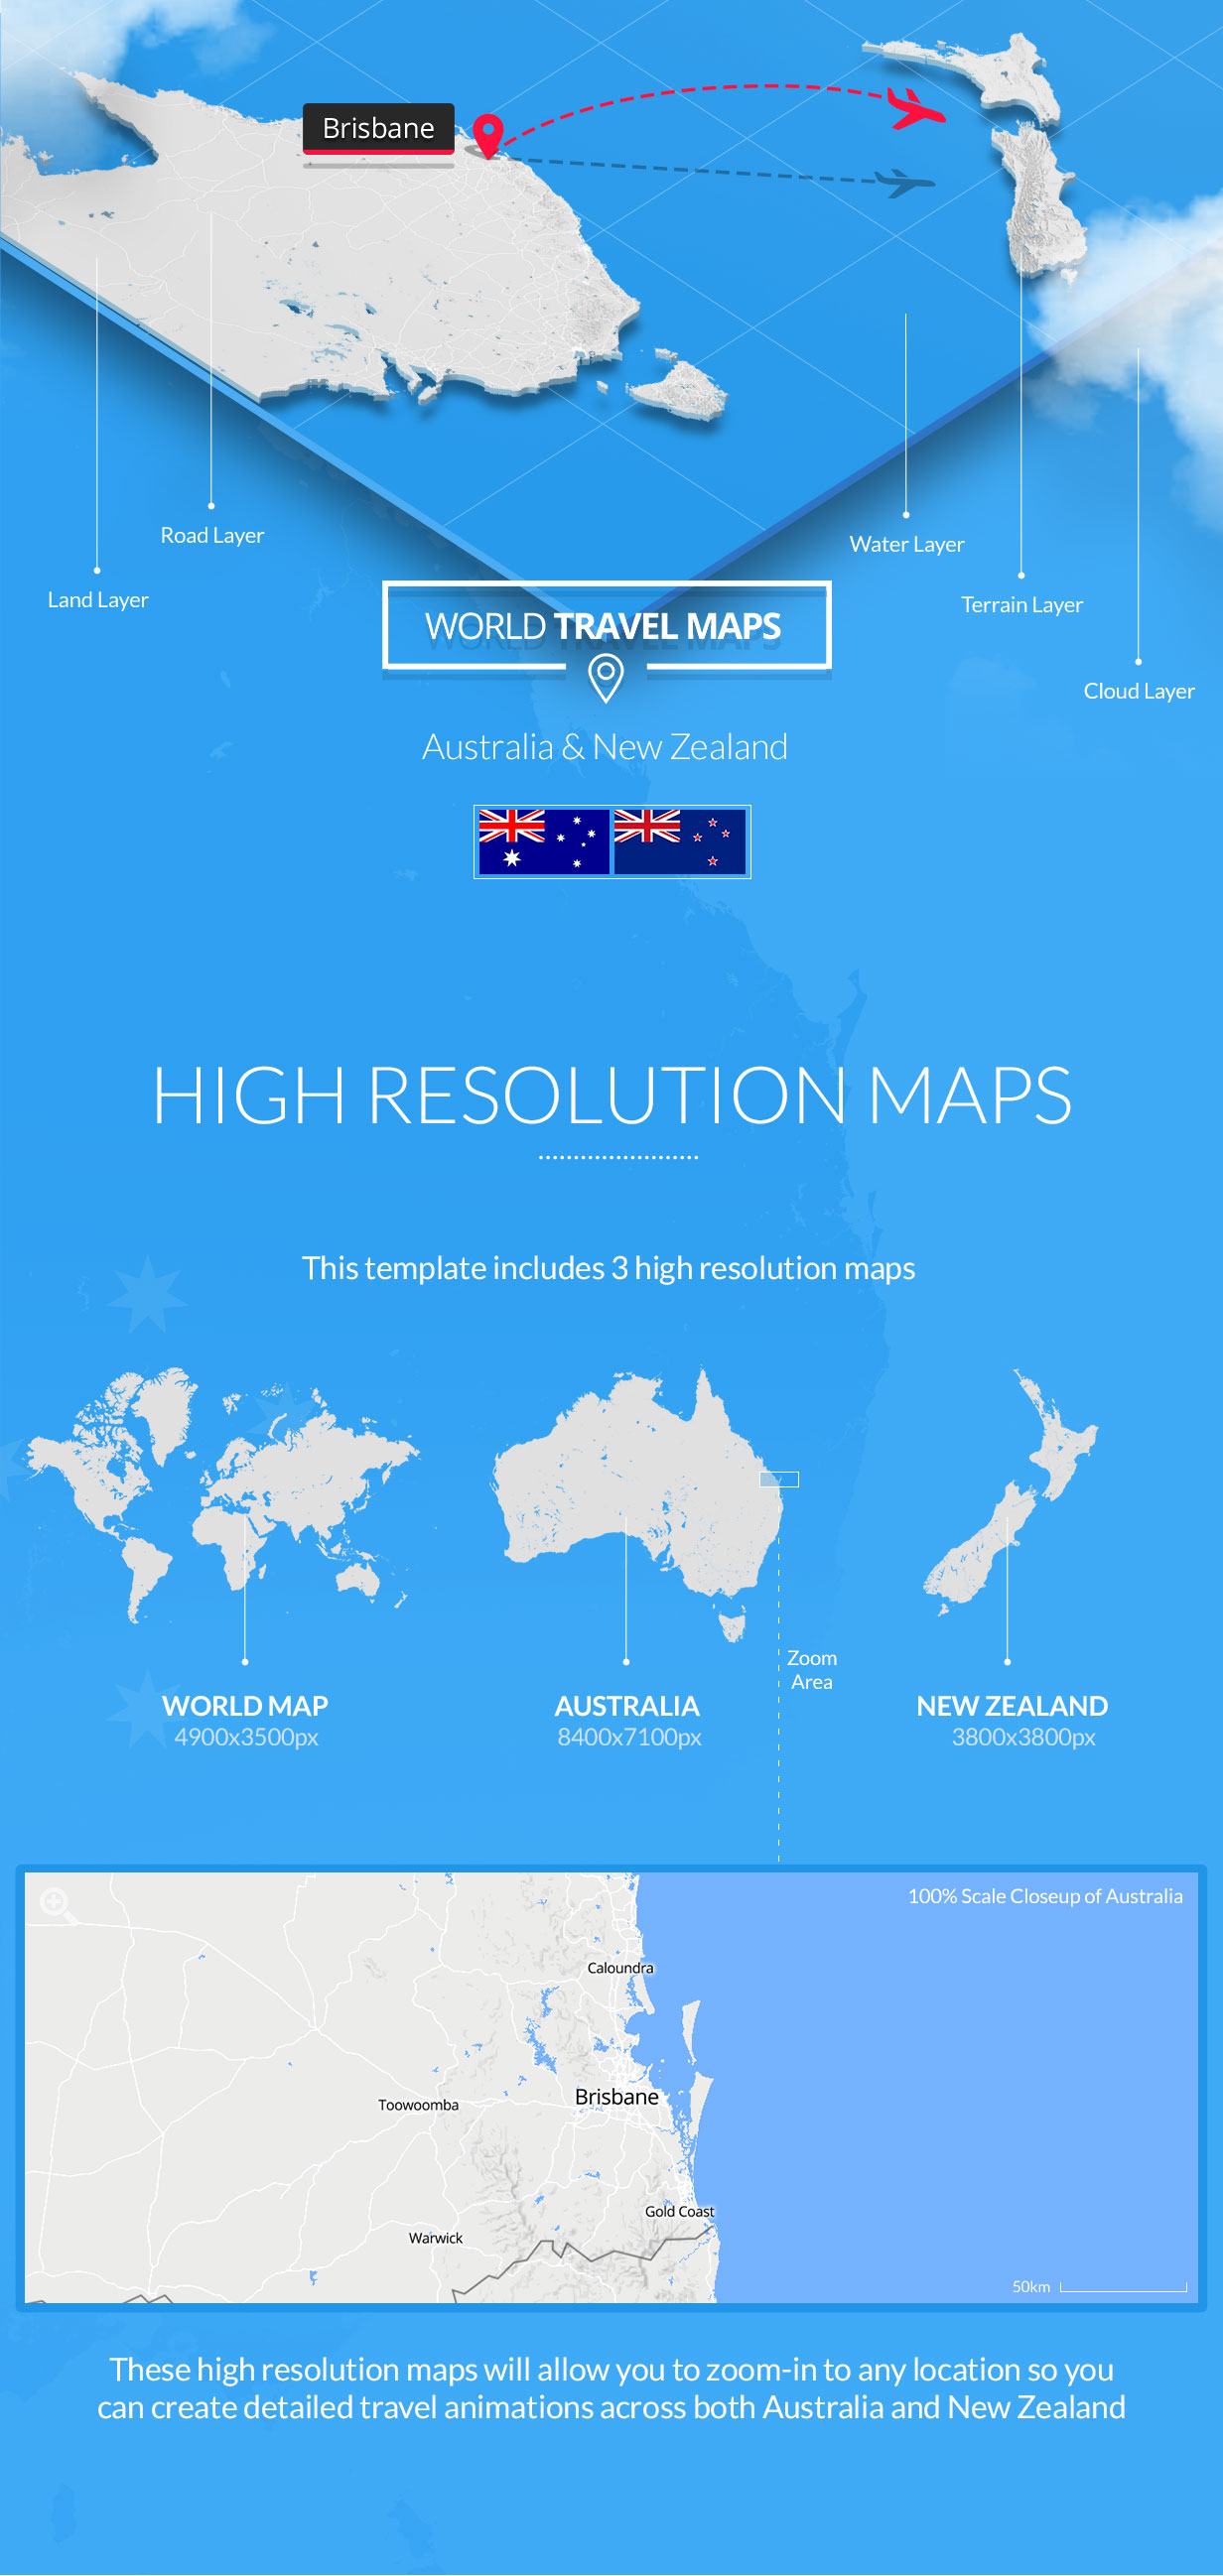 World Travel Maps - Australia and New Zealand - 1